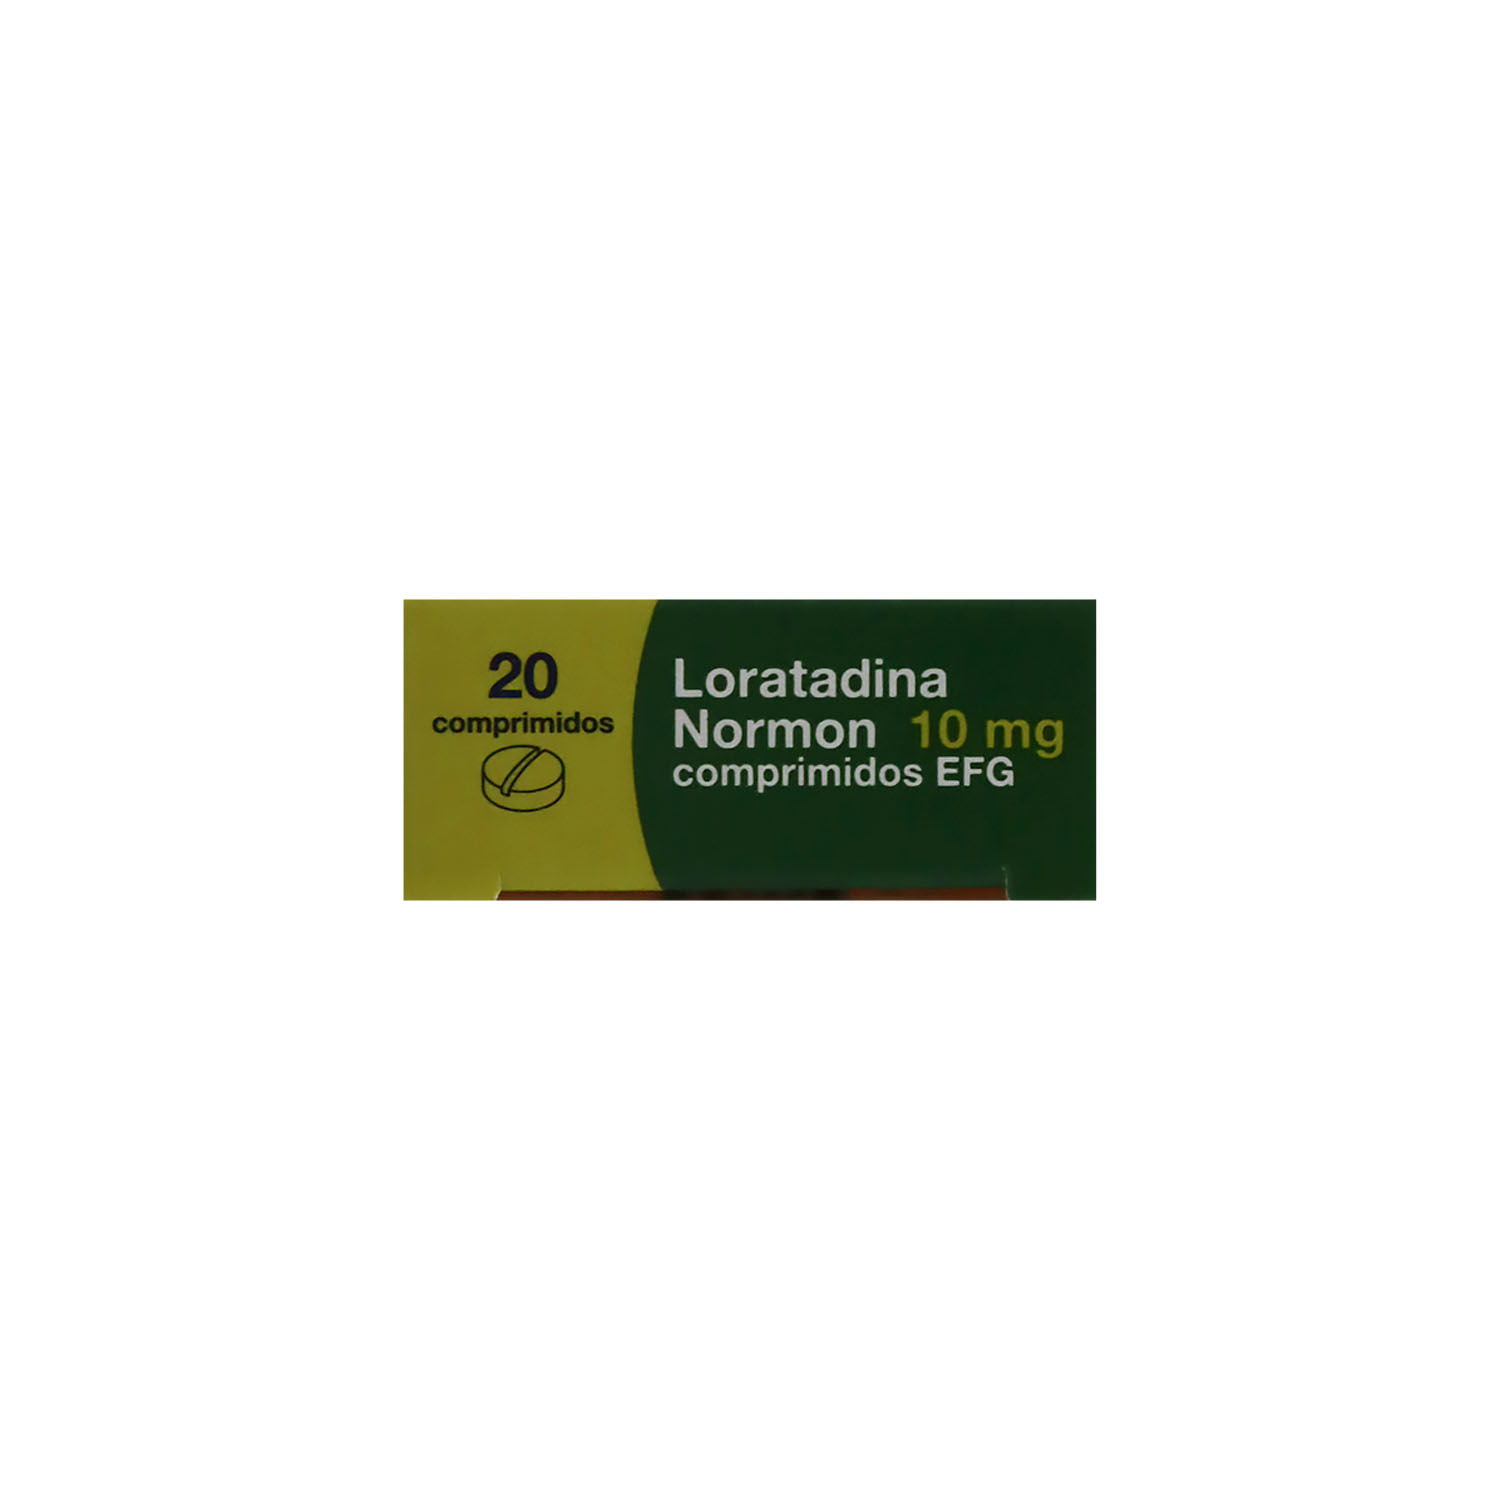 Antihistaminico Adulto Loratadina 10 Mg Normon Caja 20 Unid